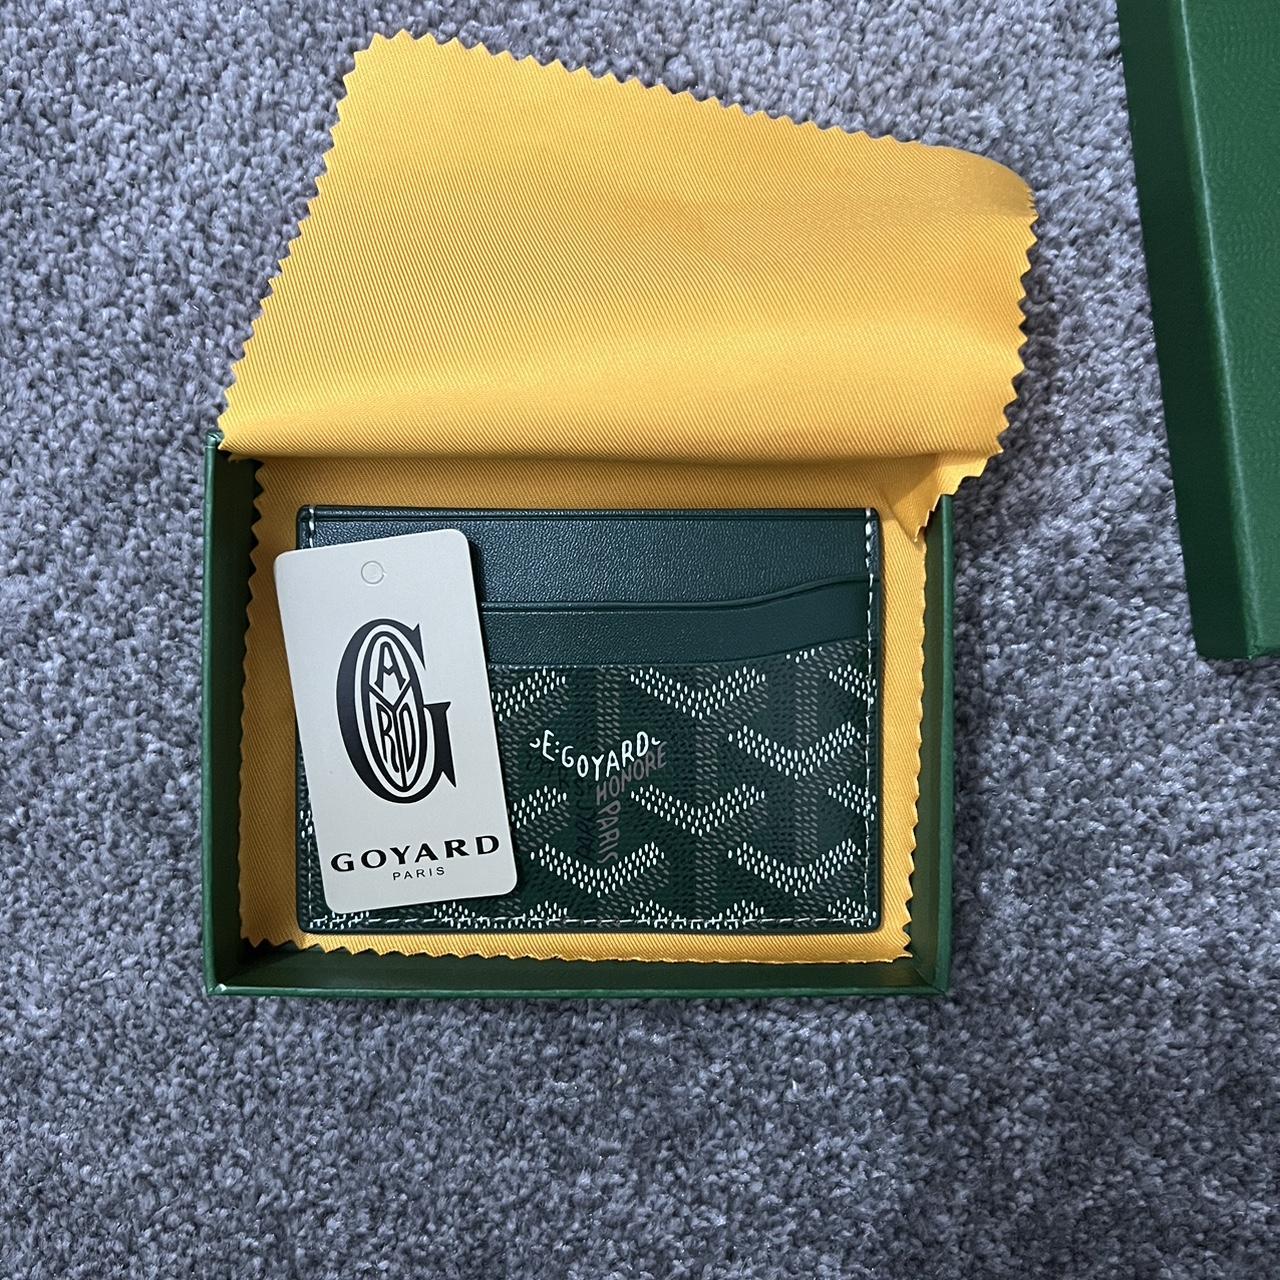 Goyard card holder - Depop